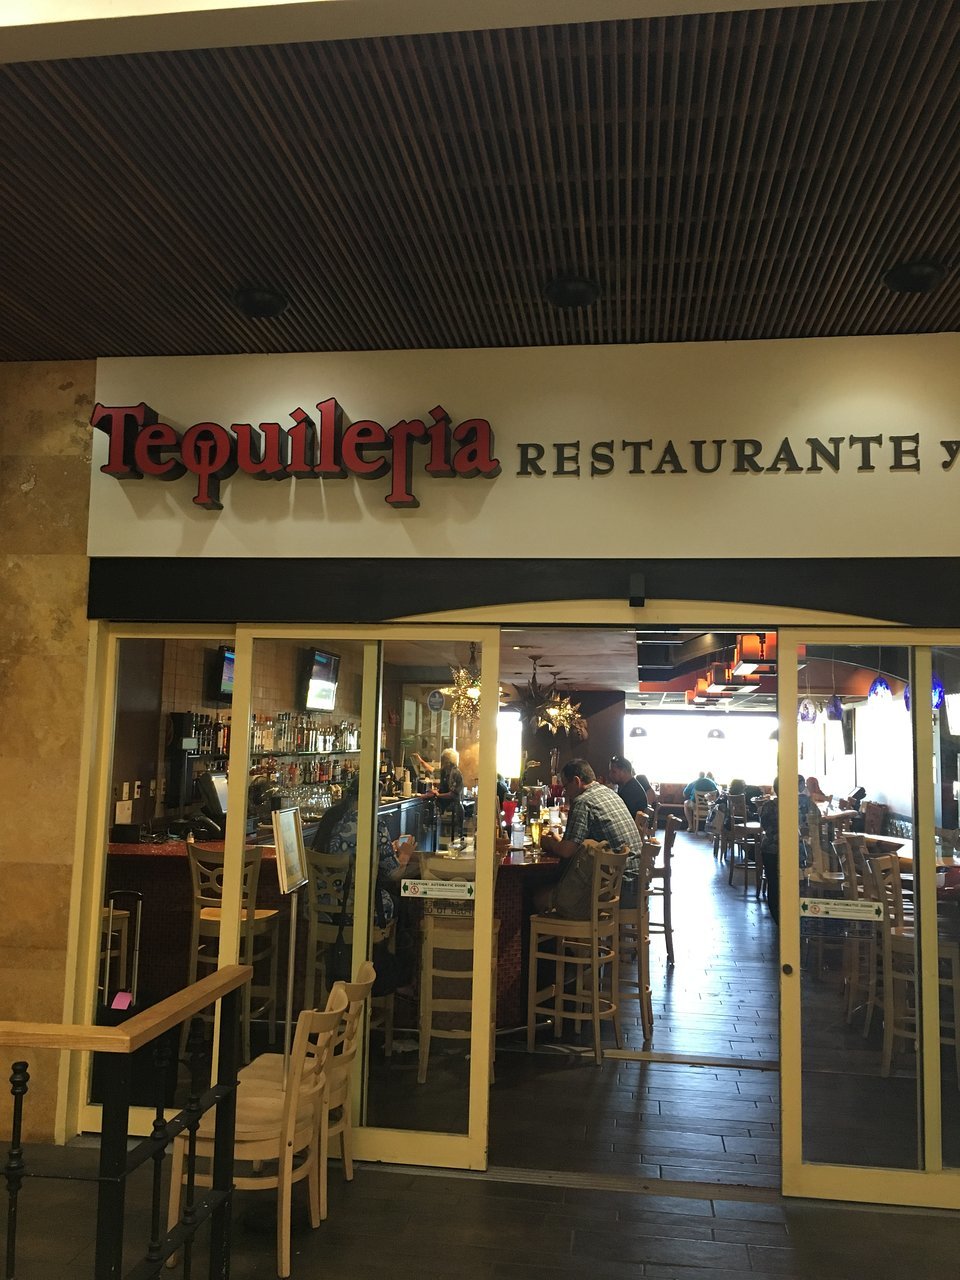 Tequileria Restaurante y Cantina